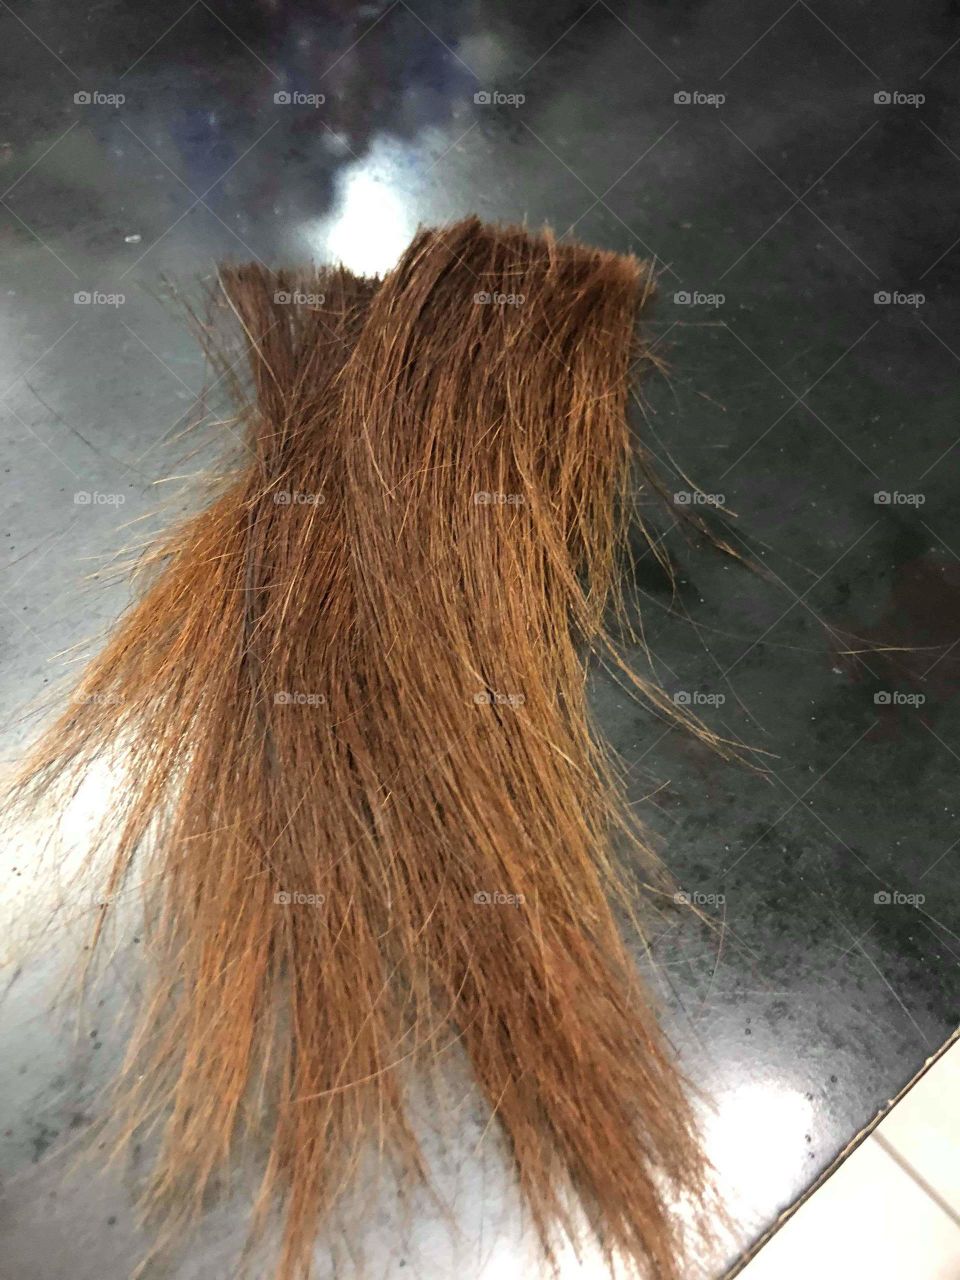 A photo of an actual cut long hair on the floor of a salon.